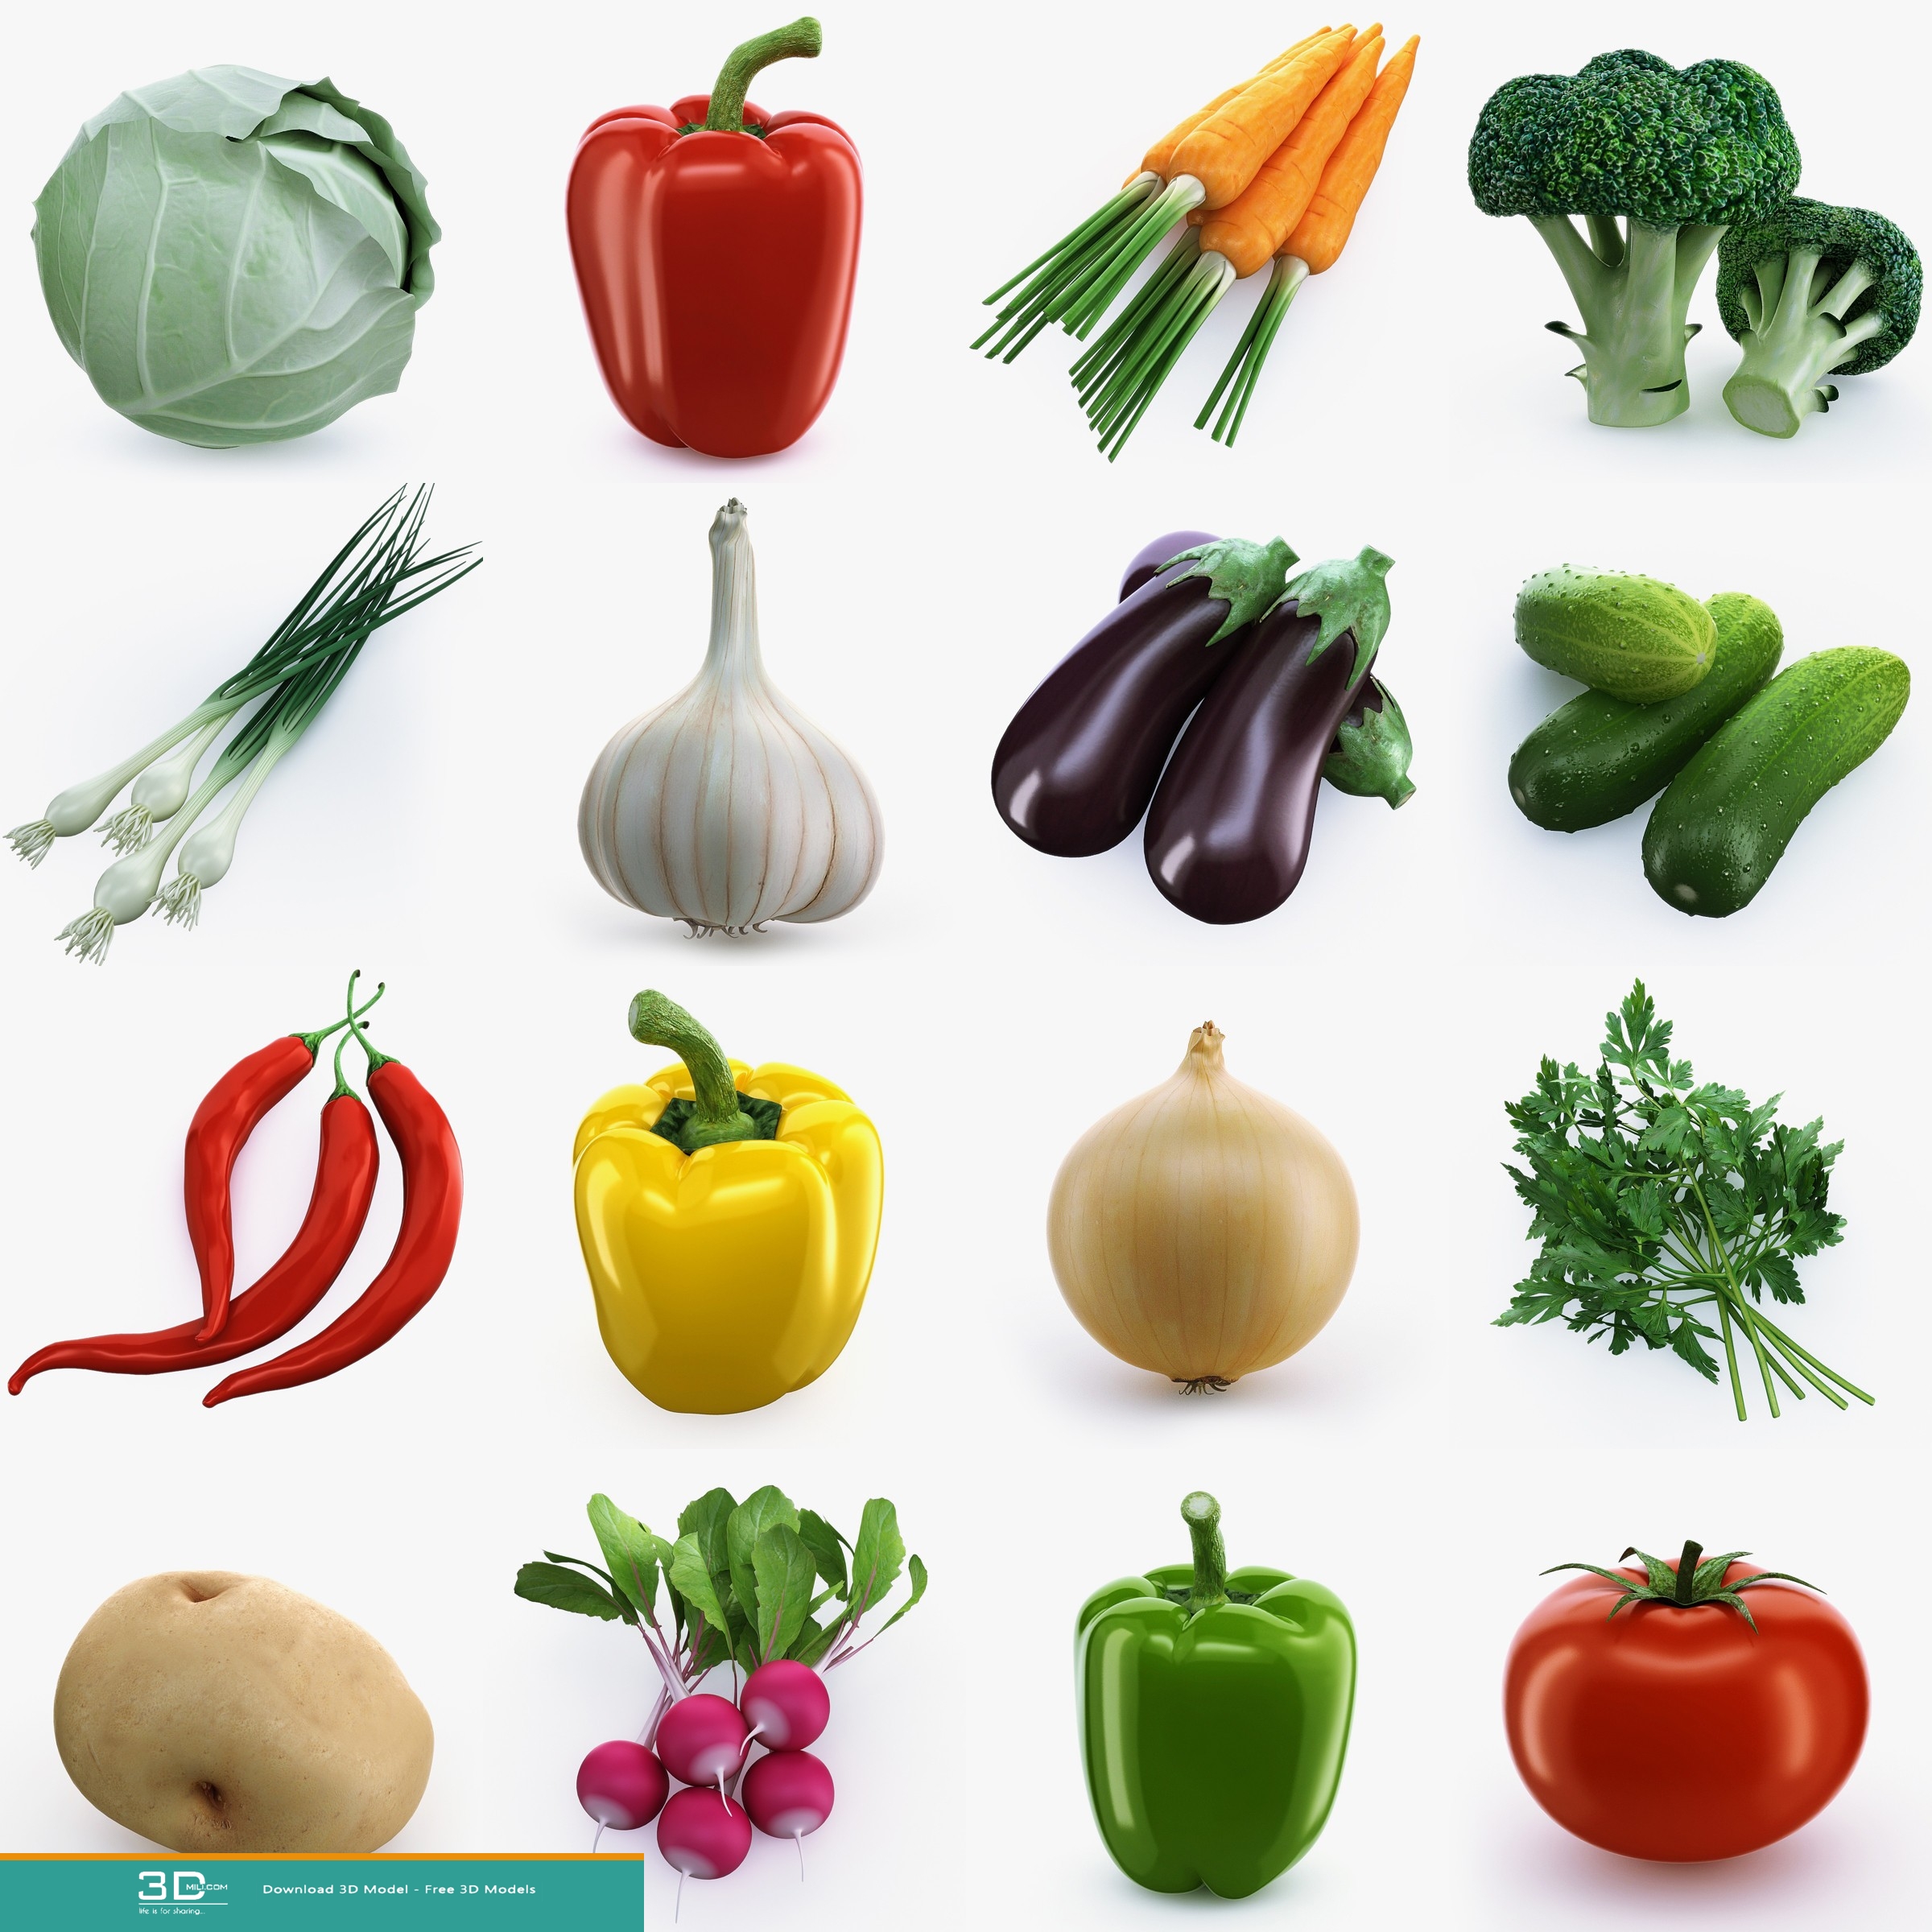 fruits and vegetables 3d model free download